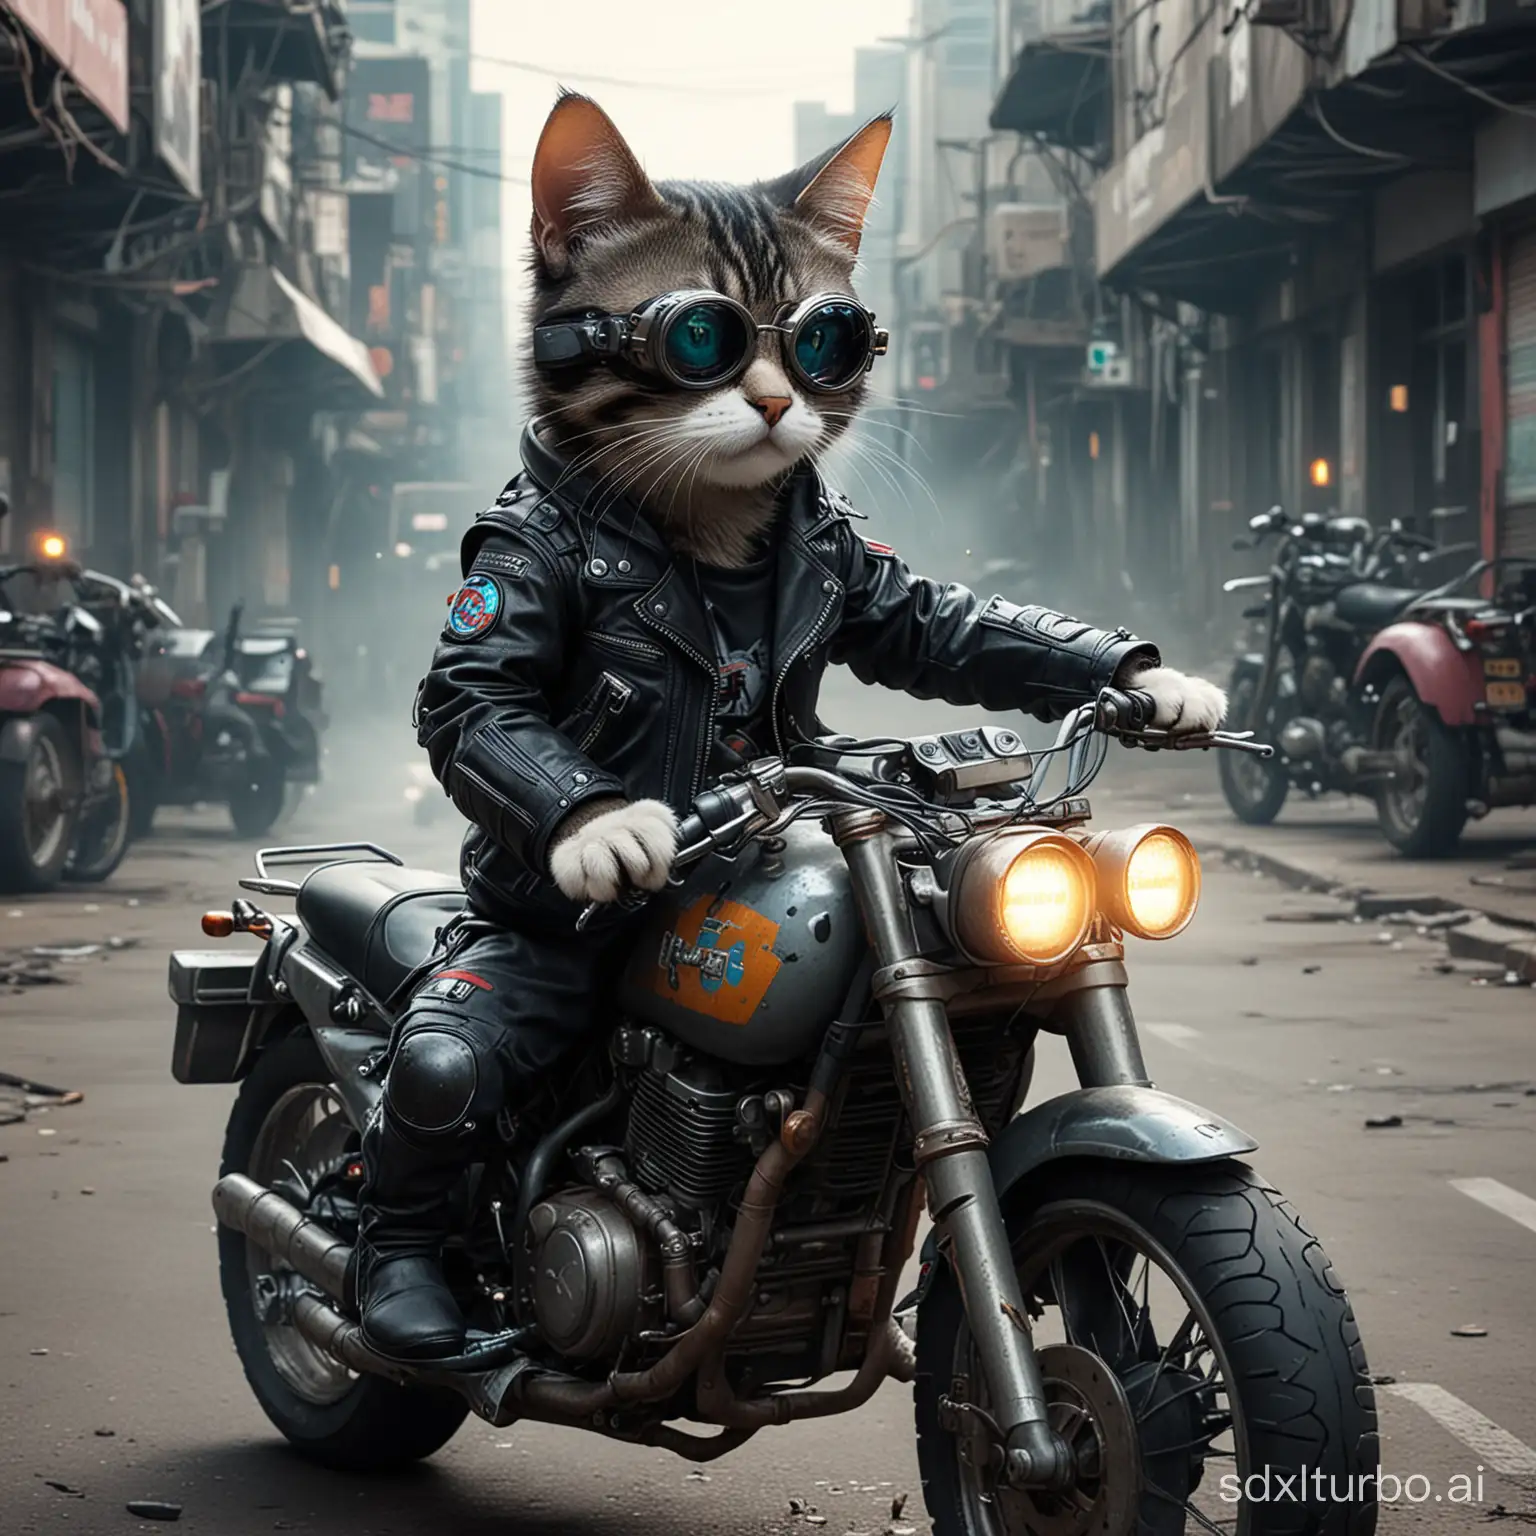 Futuristic-Cyberpunk-Cat-Riding-a-Neon-Motorcycle